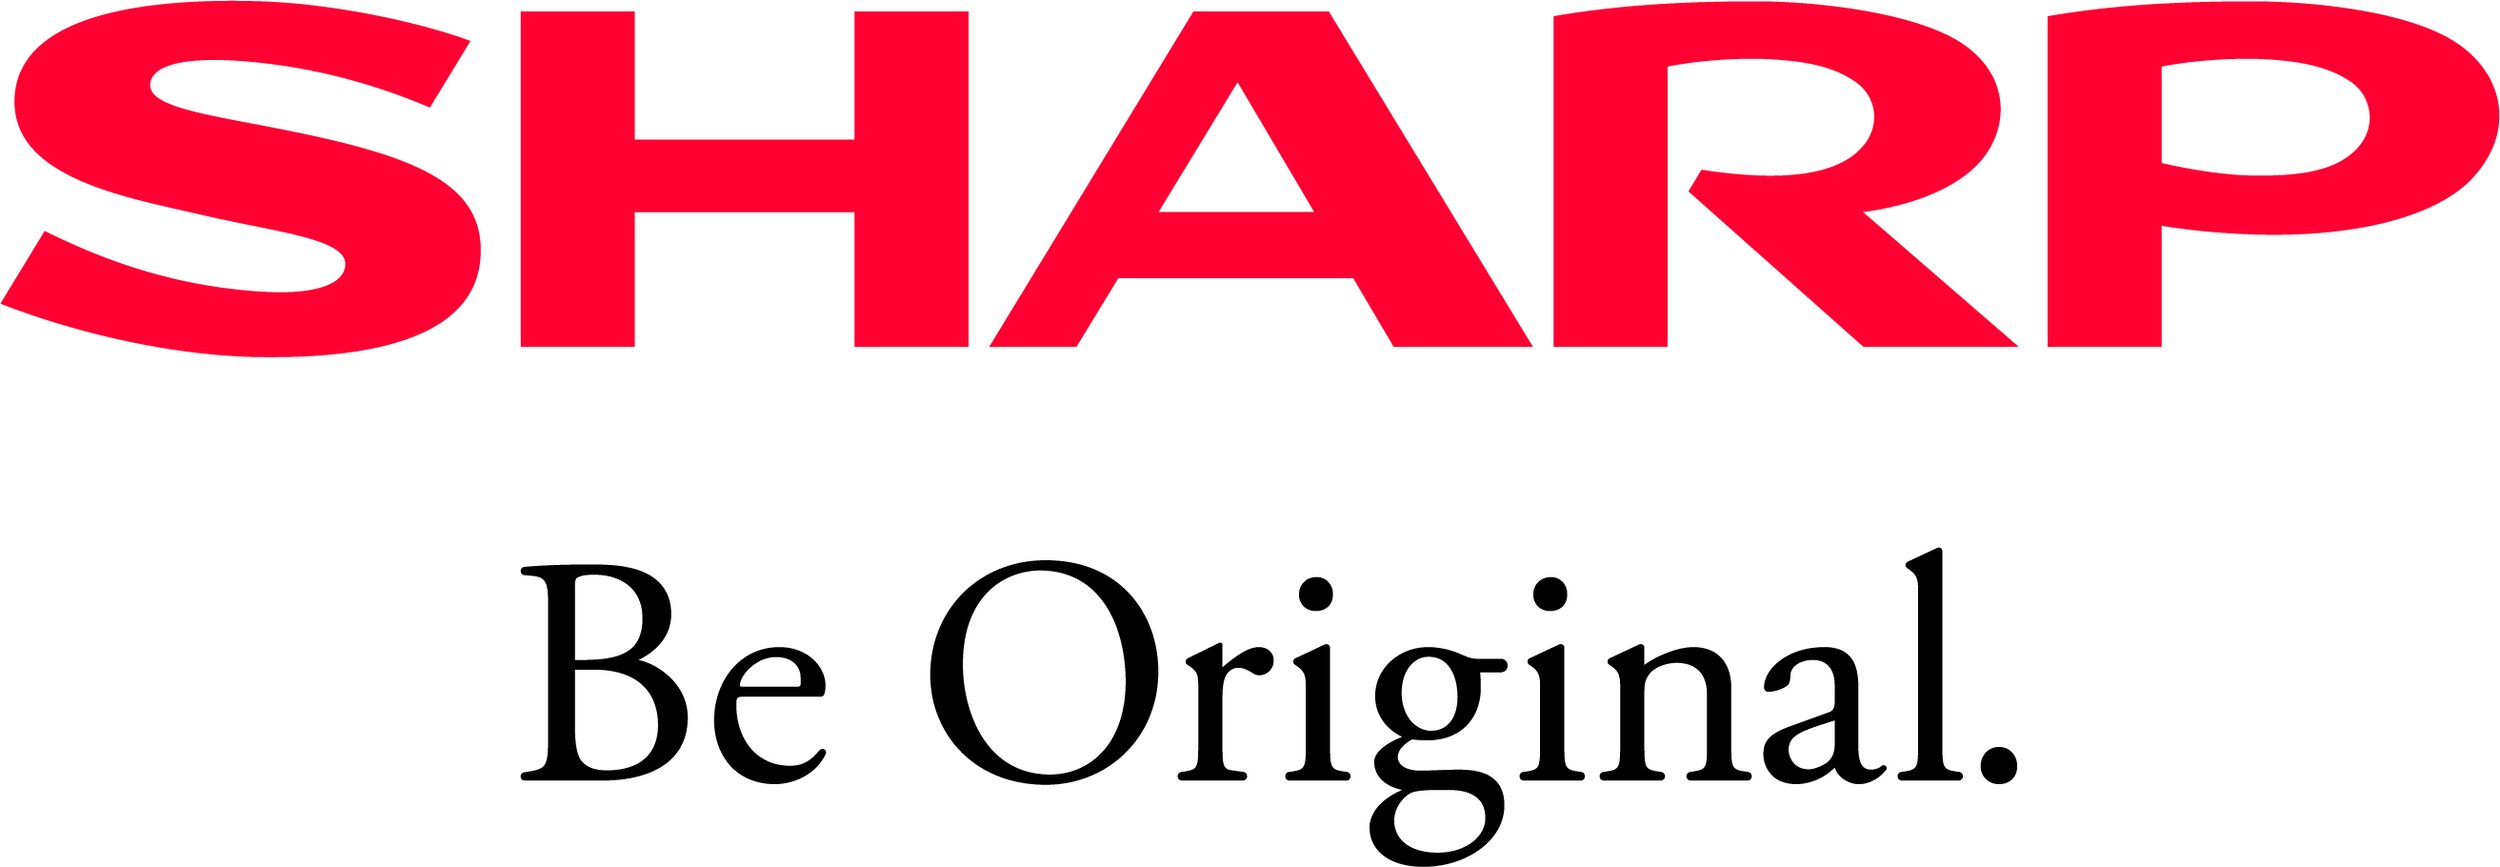 Sharp Corporation Be Original(basic) Feb 2019.jpg